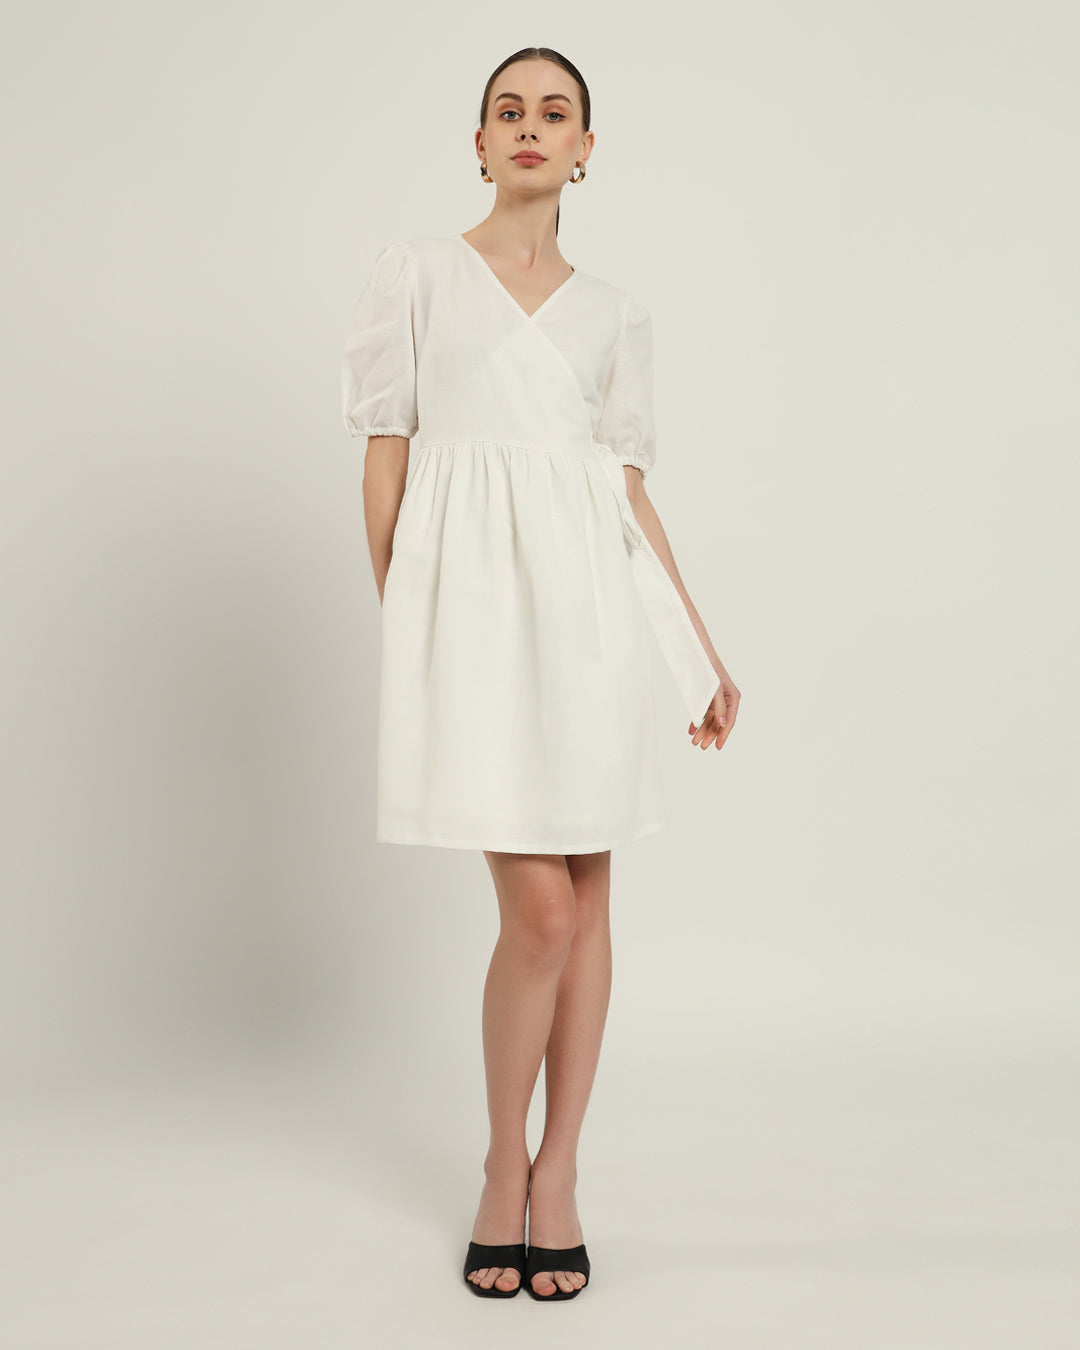 The Inzai Daisy White Linen Dress